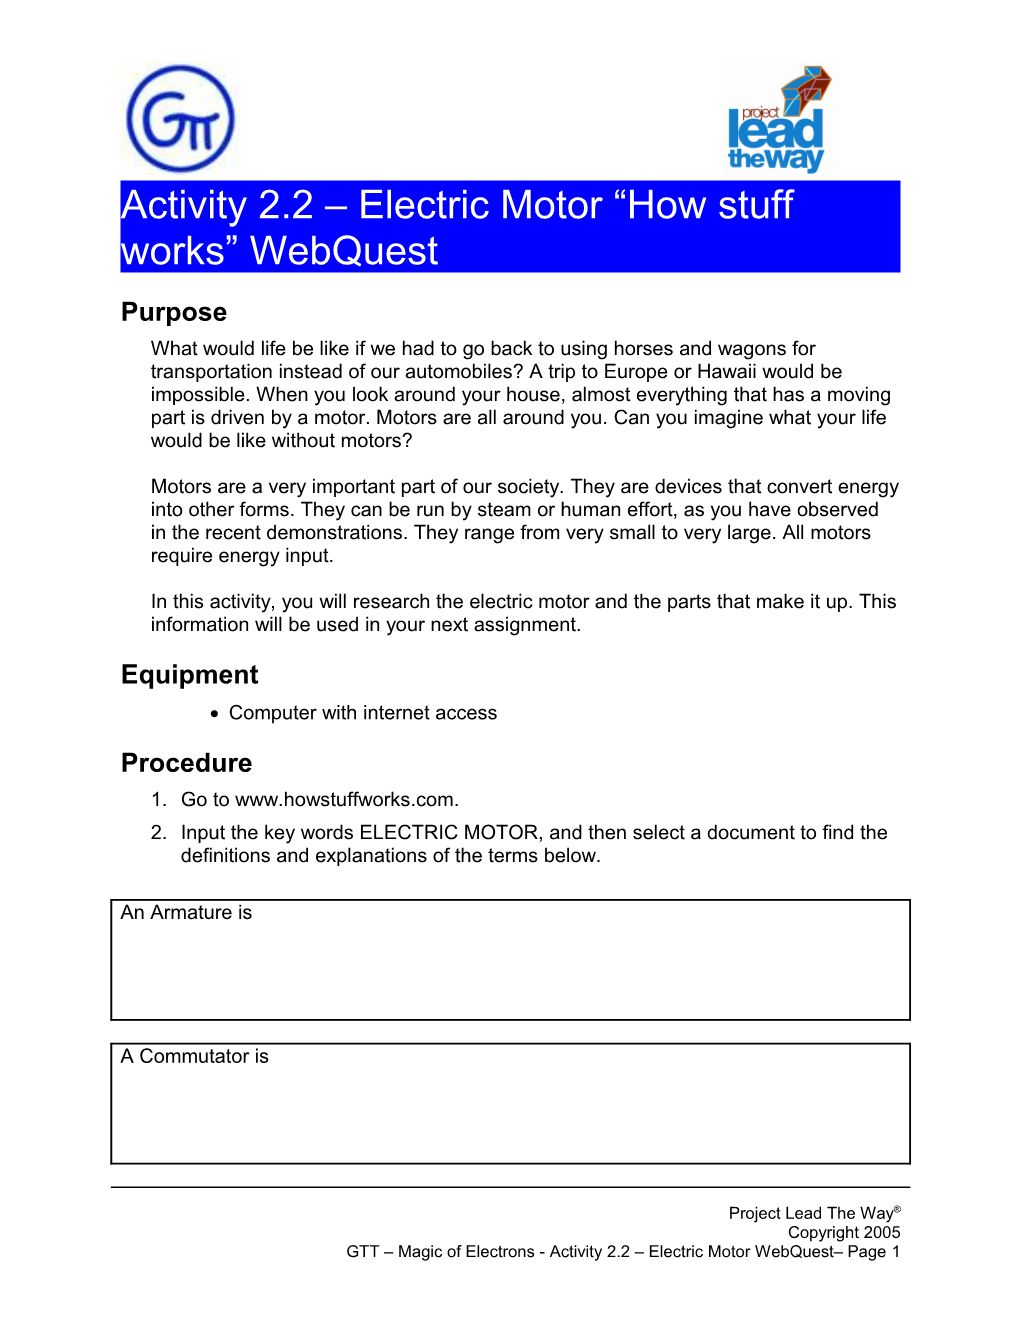 Activity 2.2 Electric Motor How Stuff Works Webquest